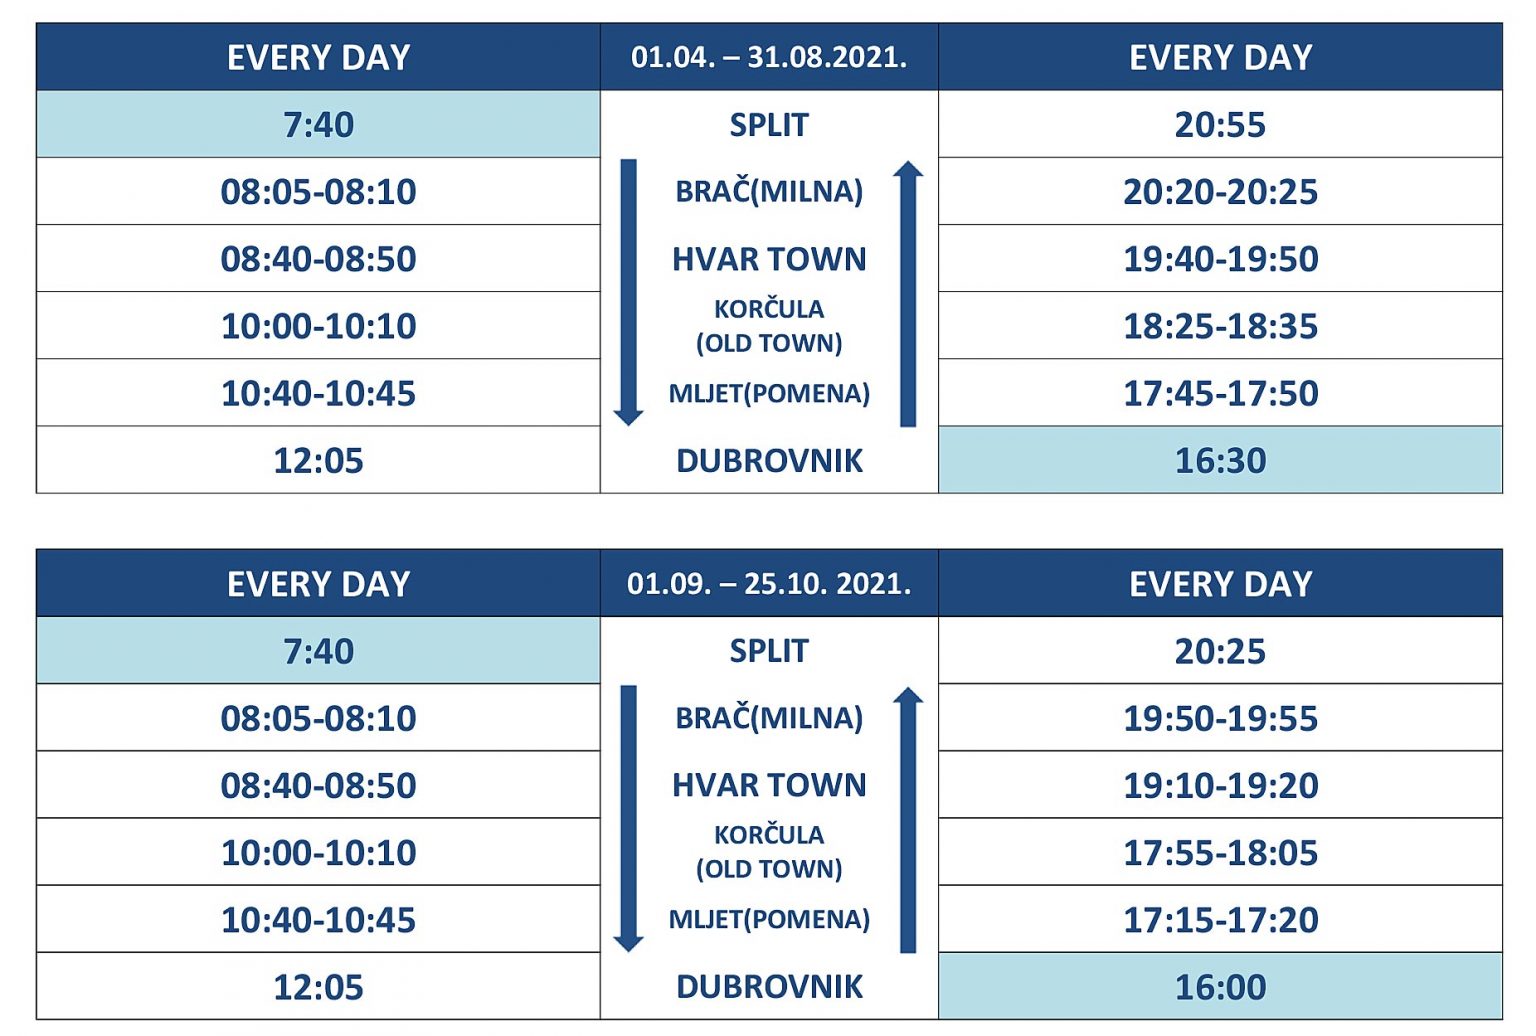 catamaran ferry timetable